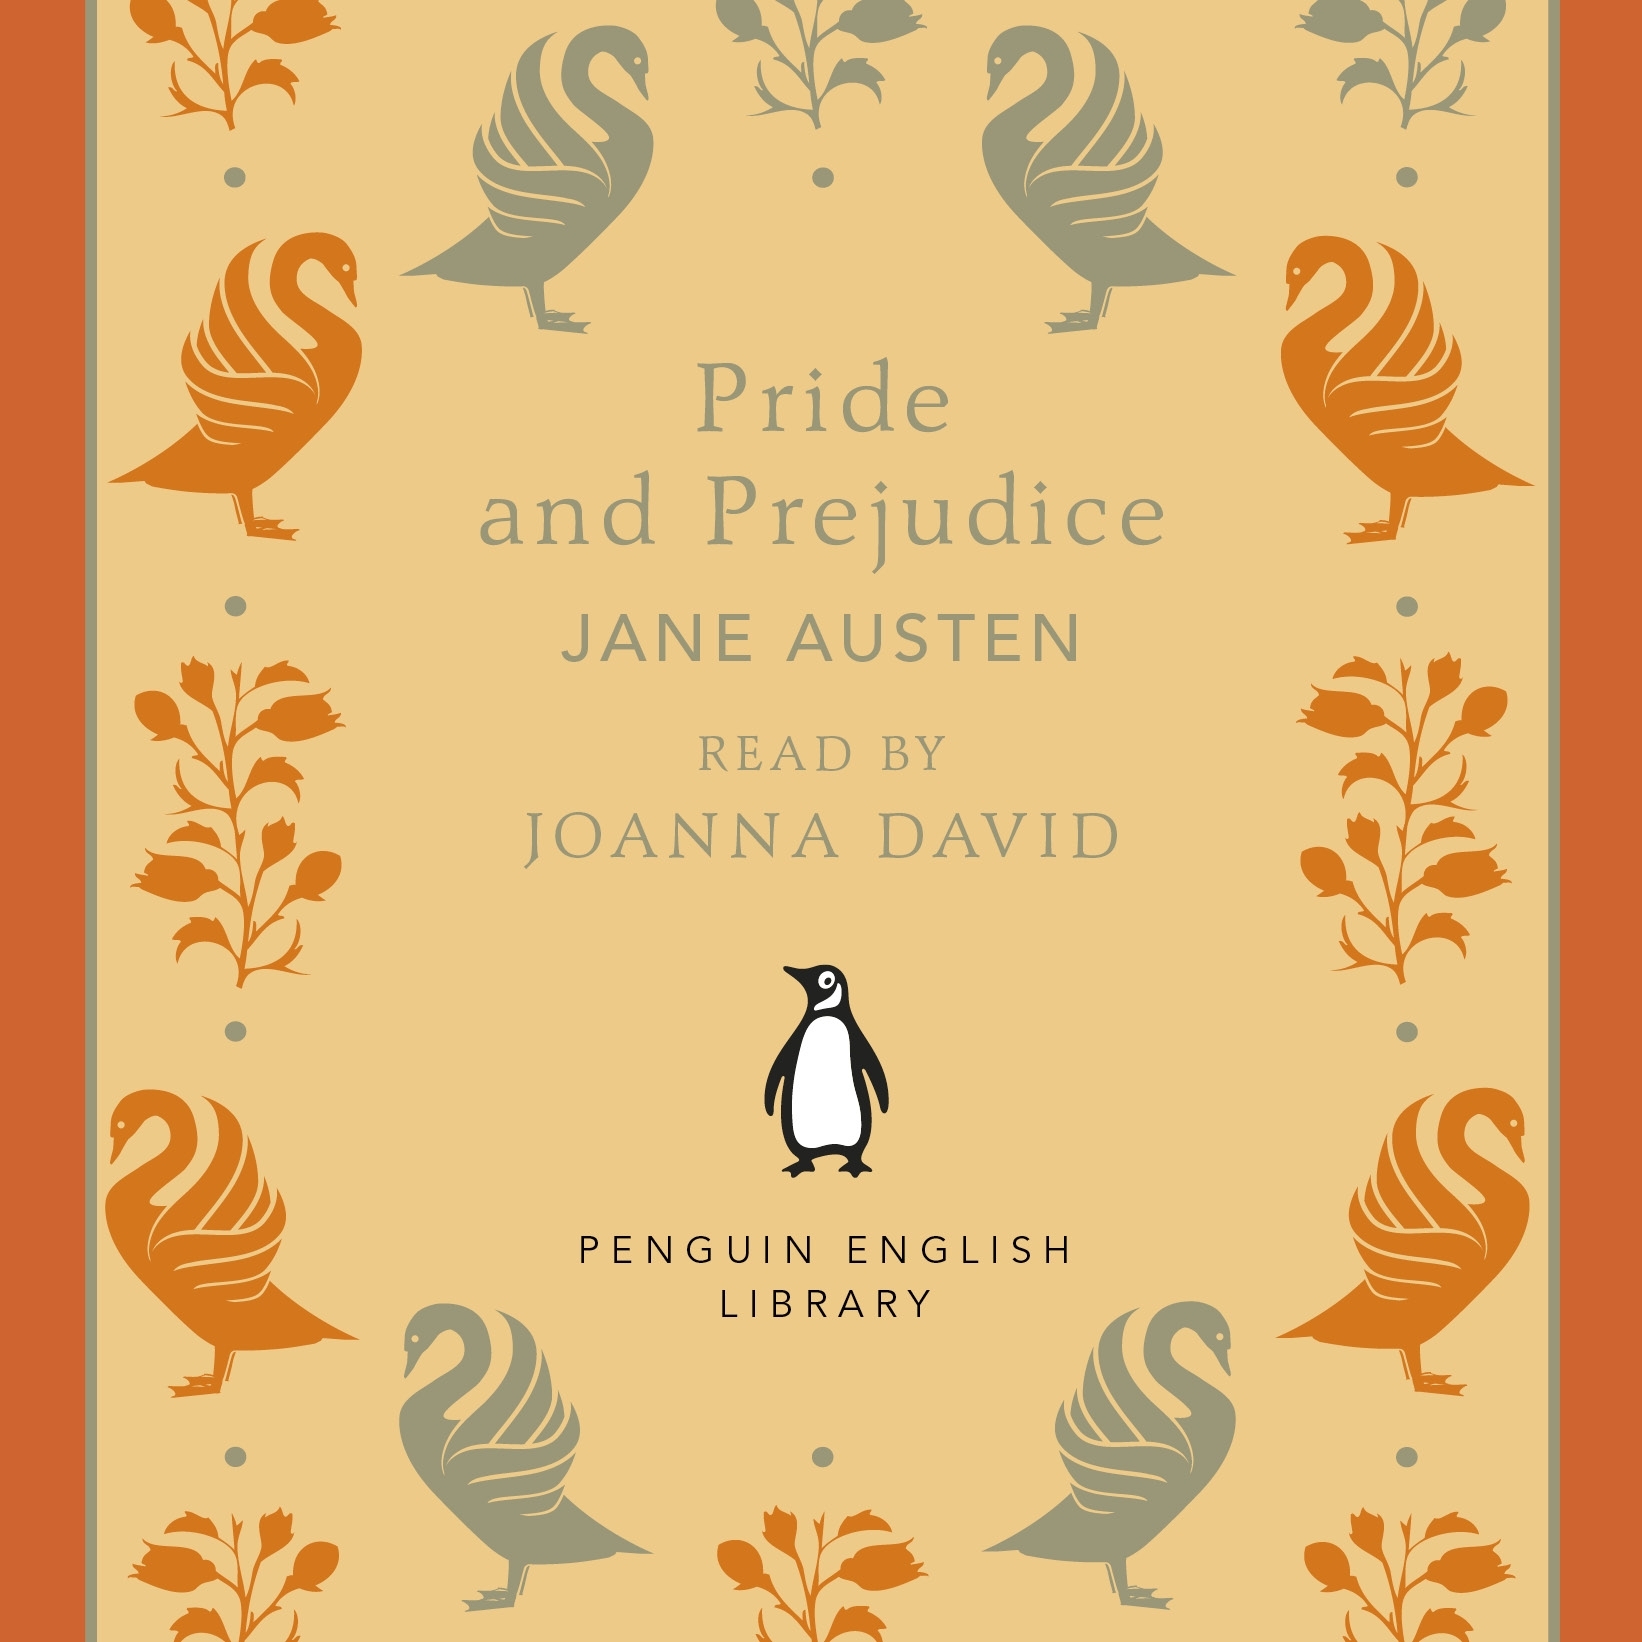 pride and prejudice audiobook free online